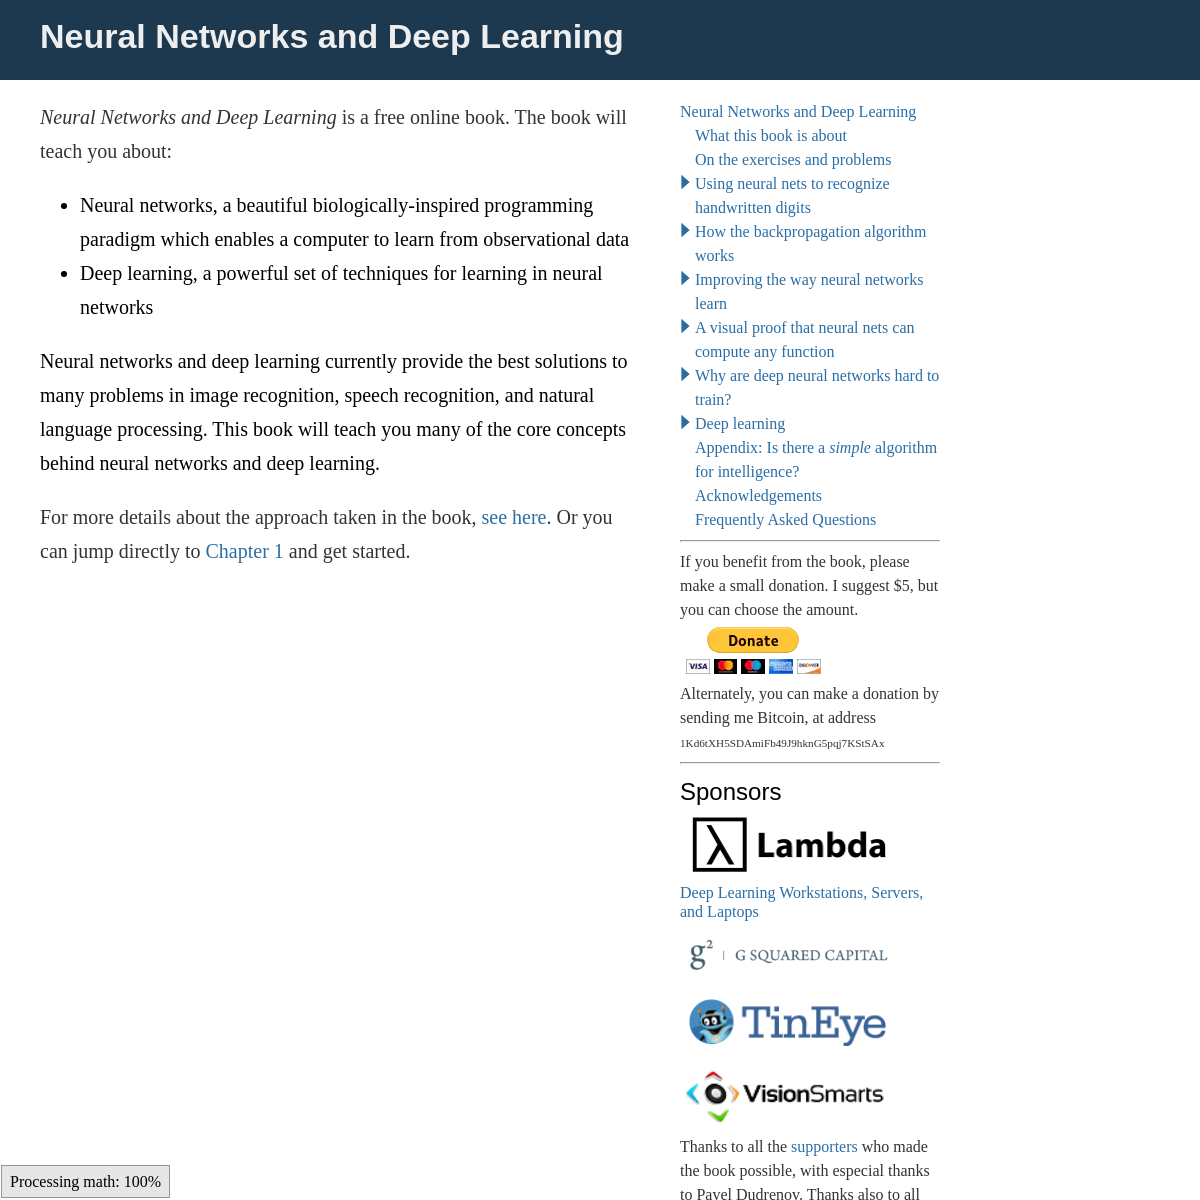 A complete backup of neuralnetworksanddeeplearning.com